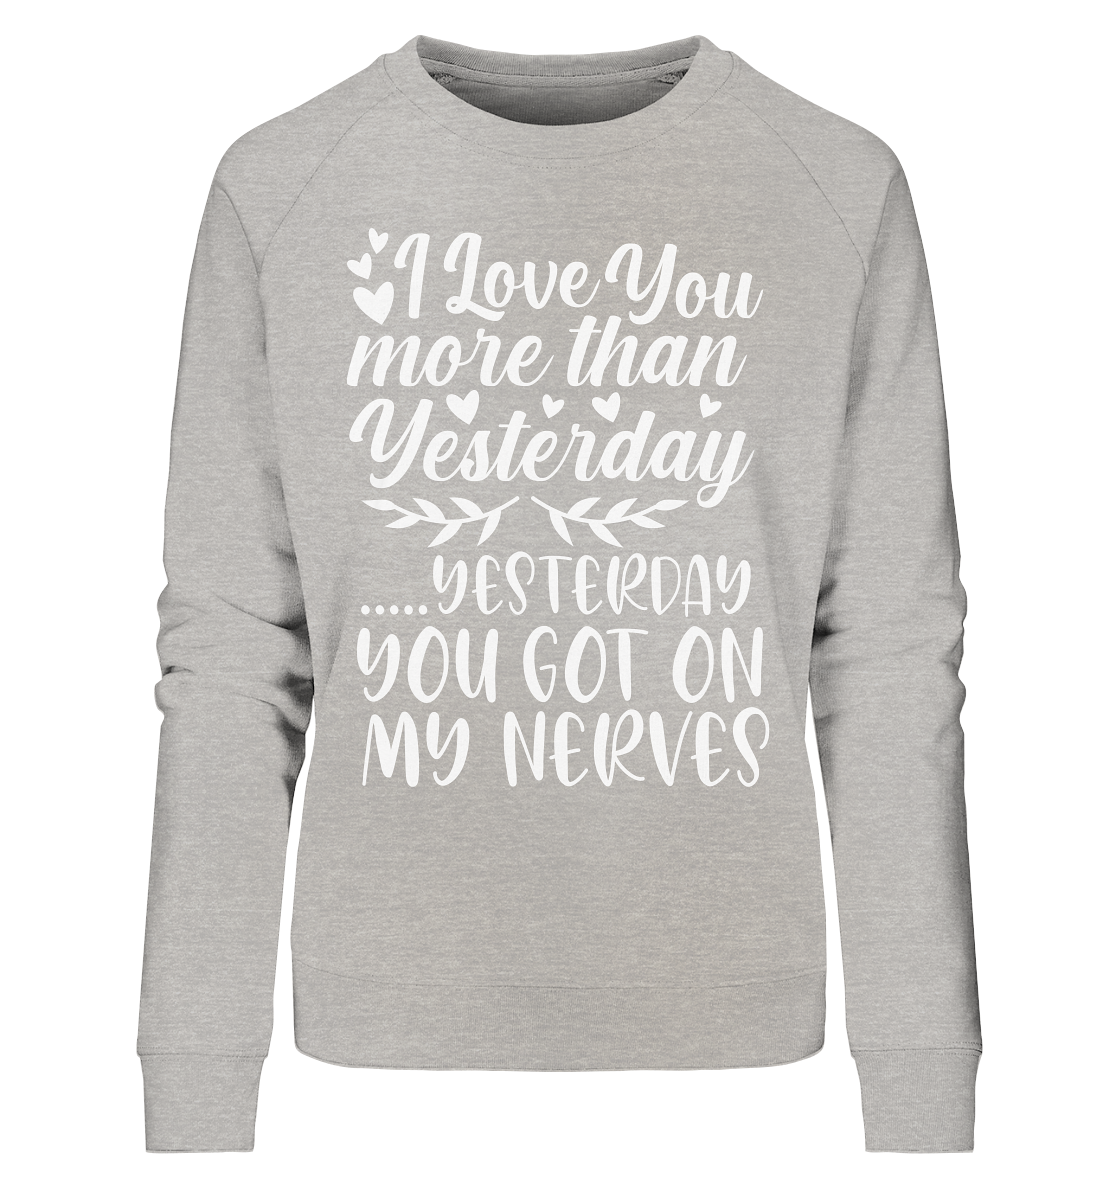 I love you more than yesterday  - Ladies Organic Sweatshirt